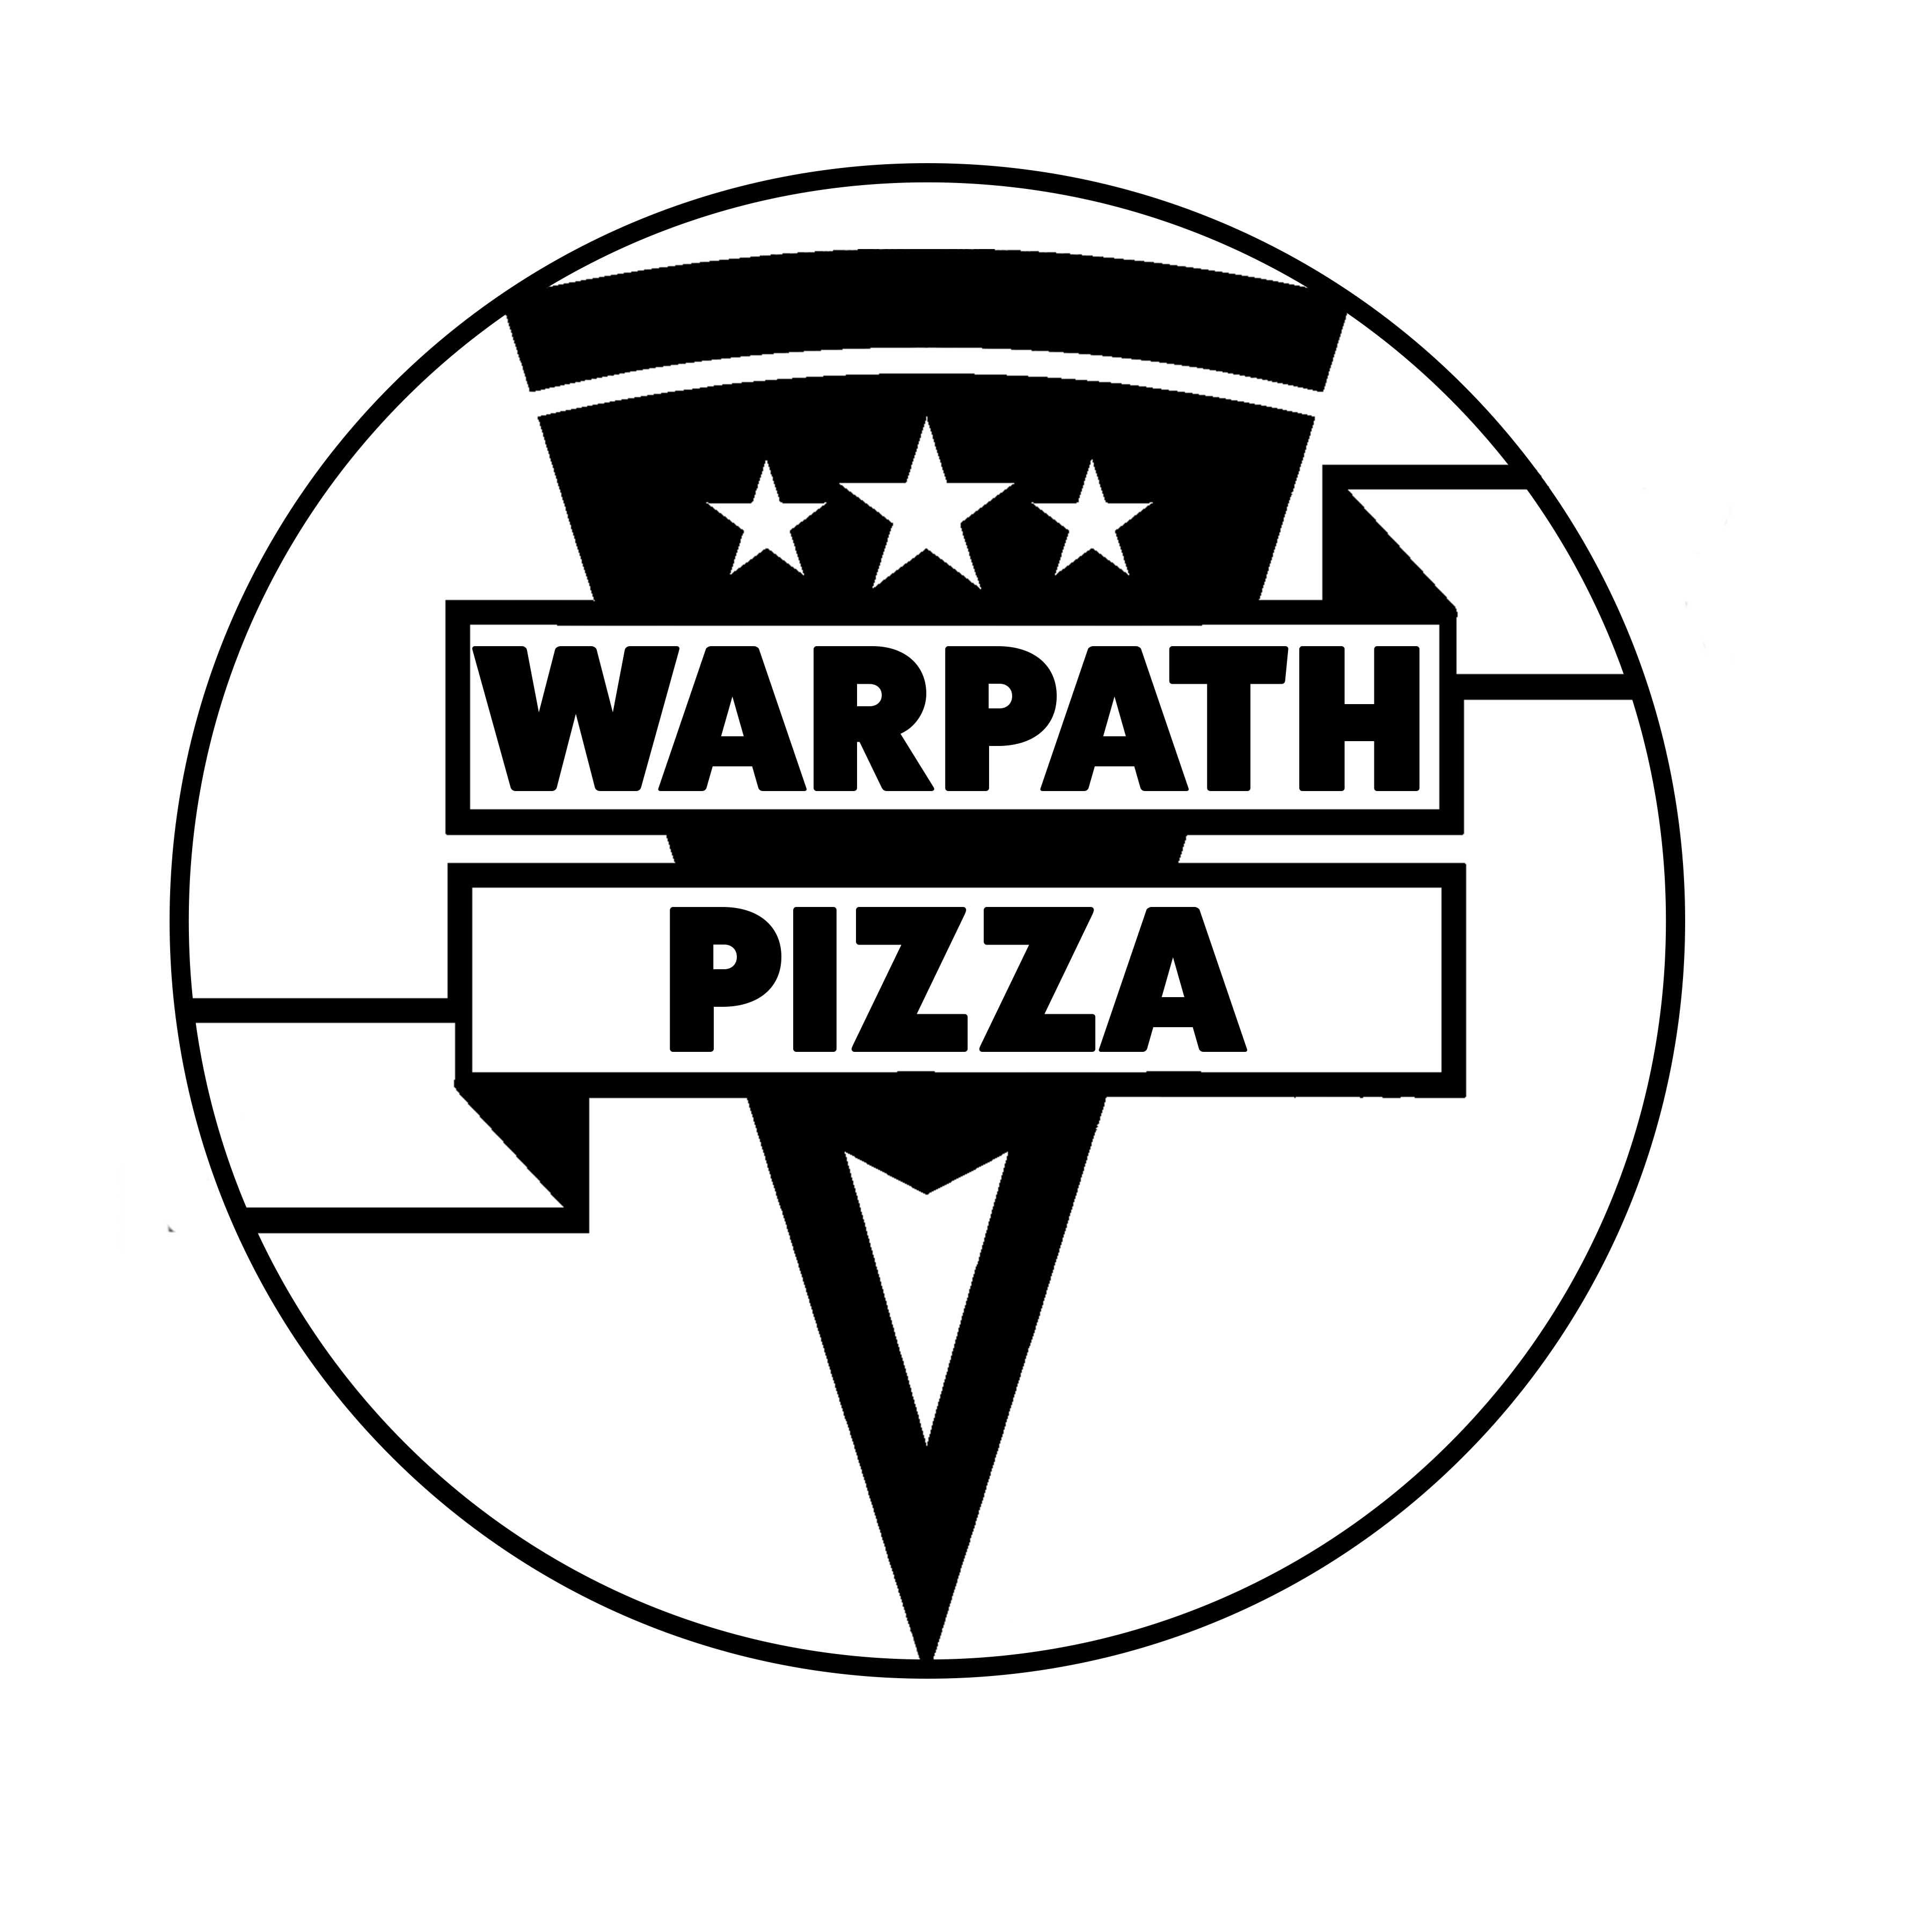 WARPATH PIZZA & PUB Logo